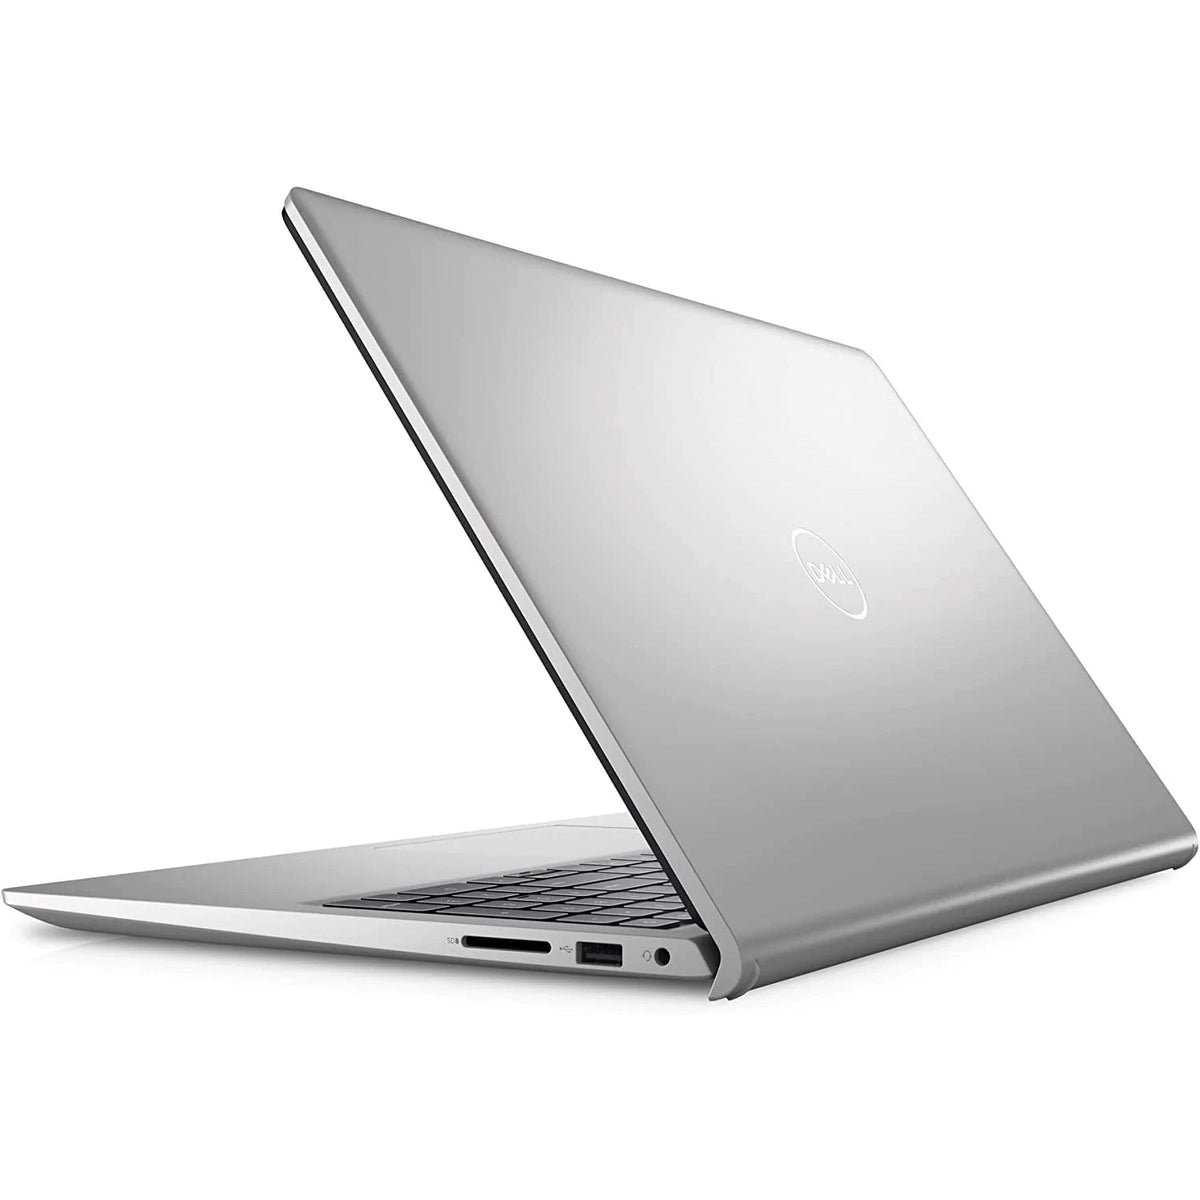 Dell Inspiron 15 3511 Laptop Intel Core i3-1115G4 8GB RAM 256GB SSD 15.6" - Silver - New